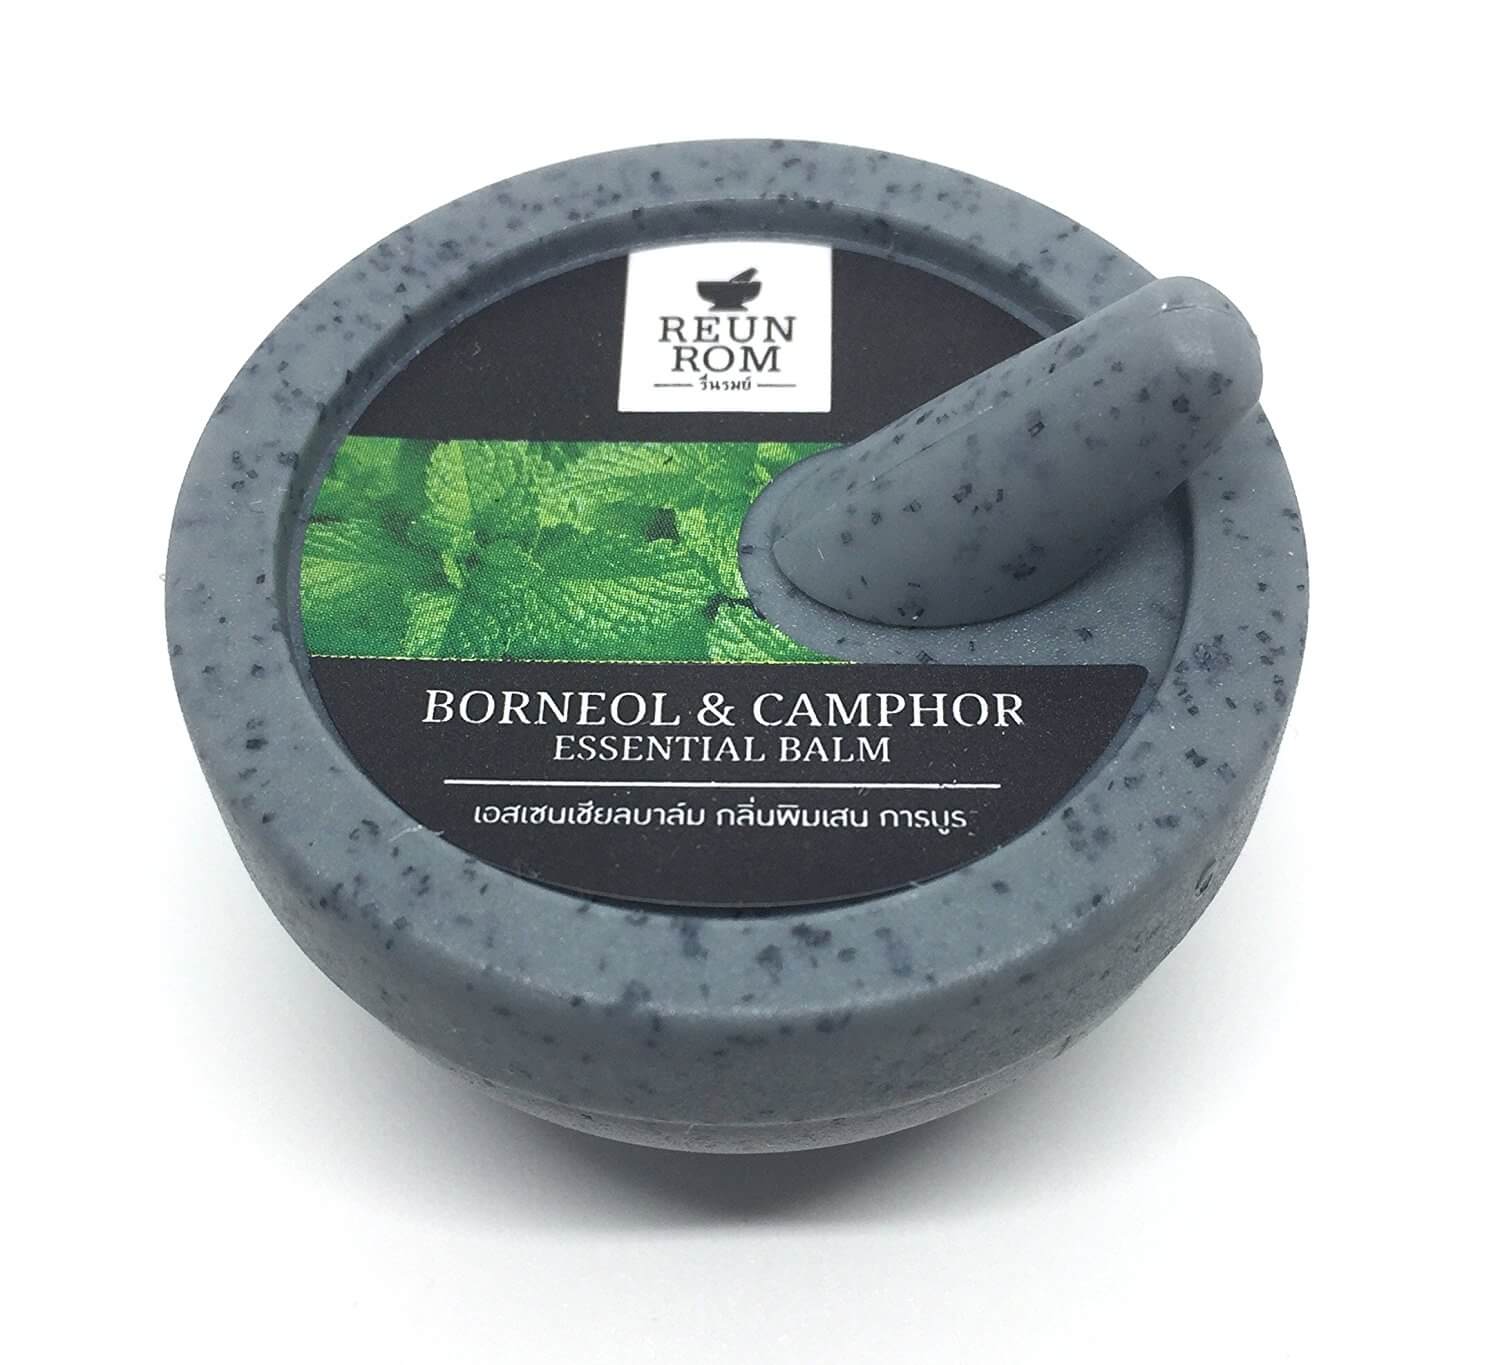 ReunRom Borneol & Camphor Essential Balm 7 g น้ำมันหอมระเหยเนื้อบาล์มกลิ่นพิมเสน การบูร